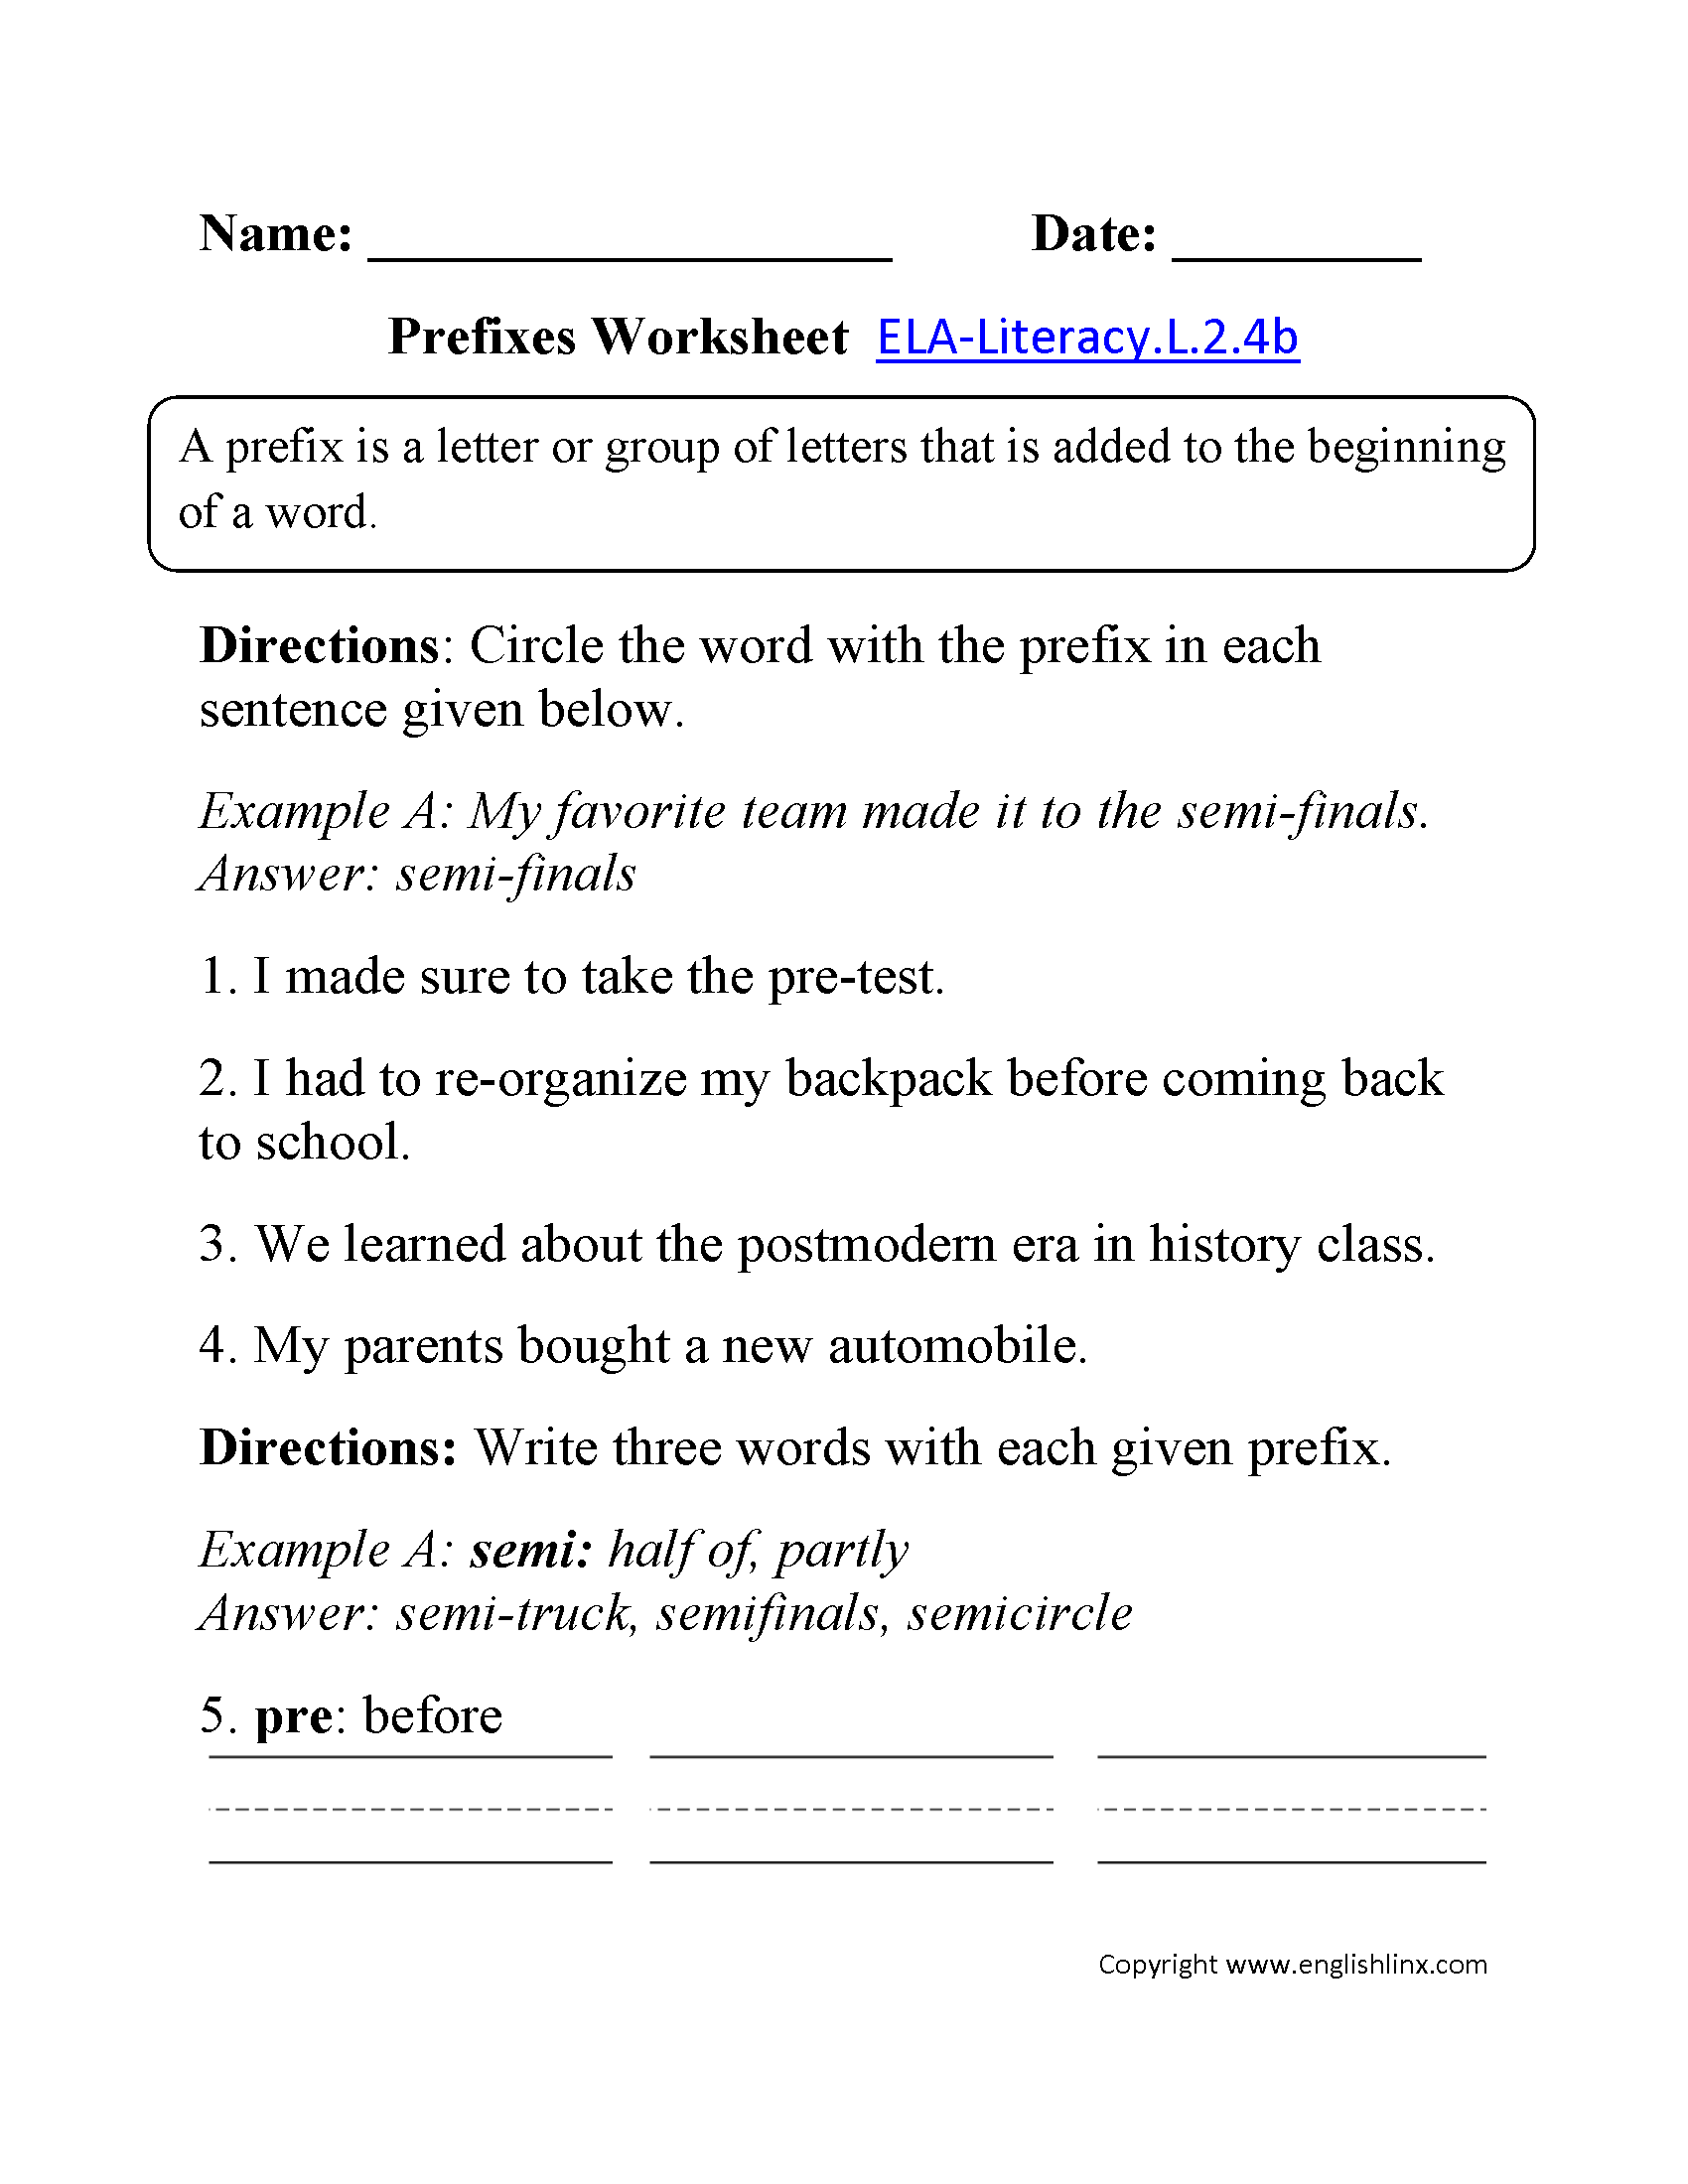 Reflexive Pronouns 2nd Grade Worksheets Image